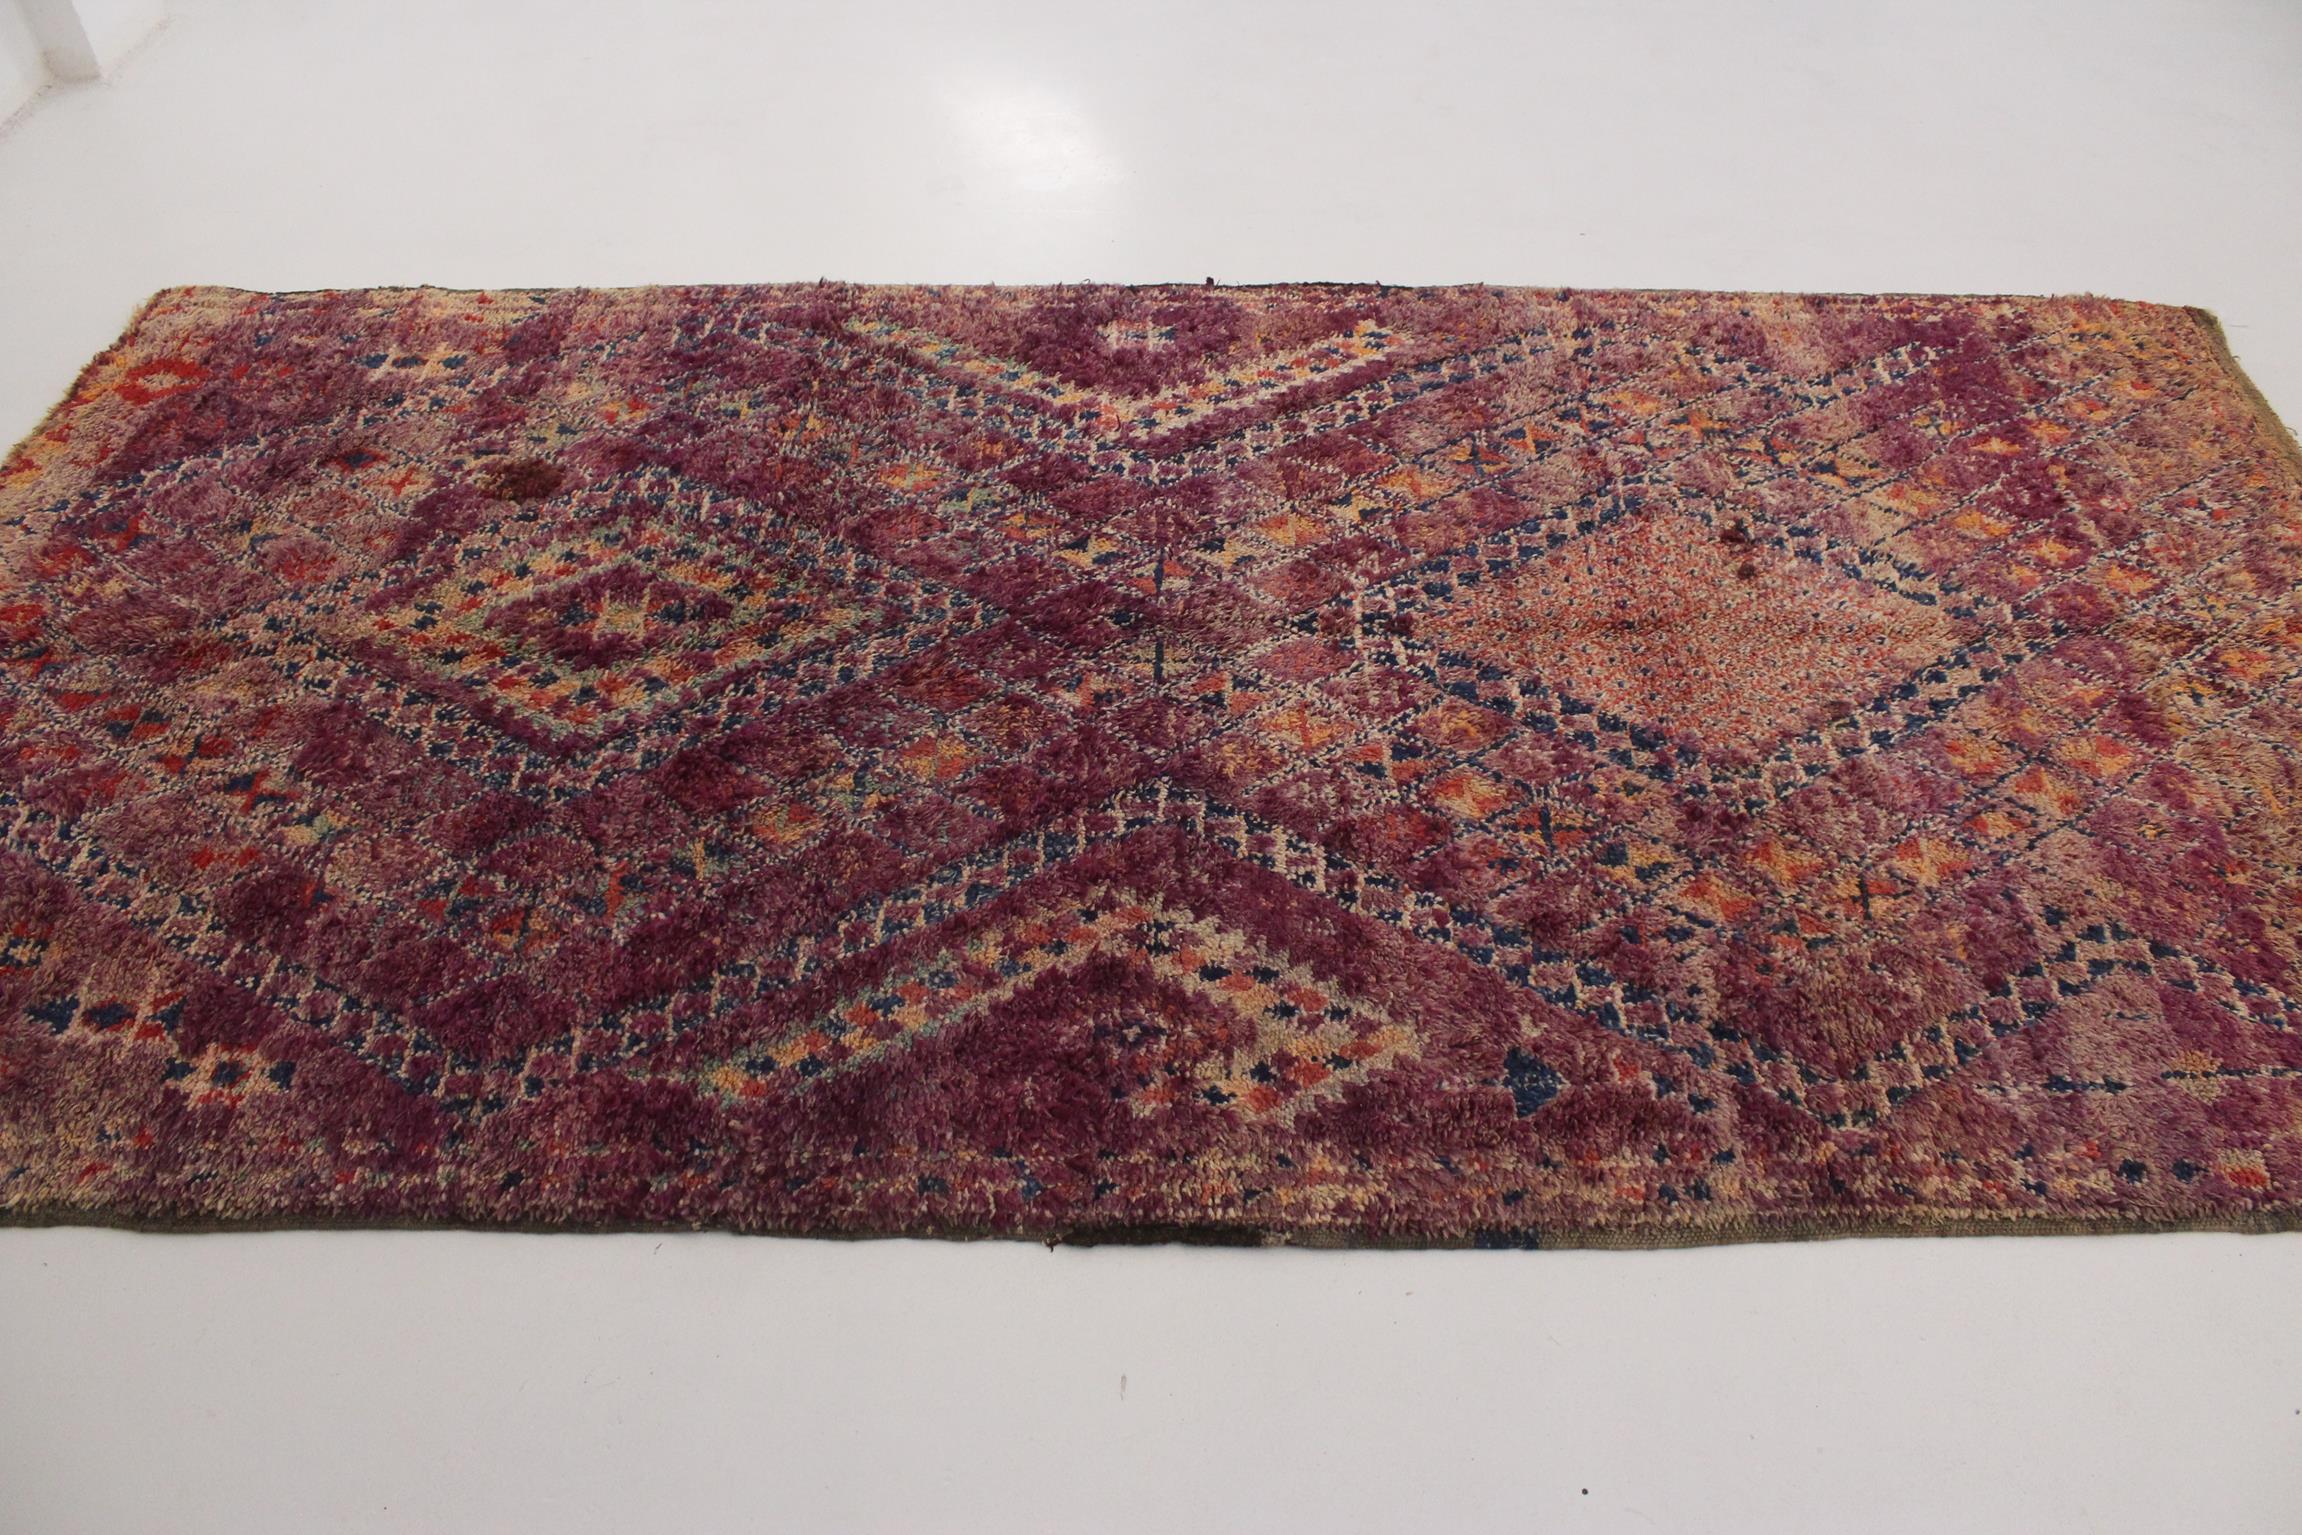 Tribal Vintage Moroccan Beni Mguild rug - Purple - 6.1x12feet / 187x368cm For Sale